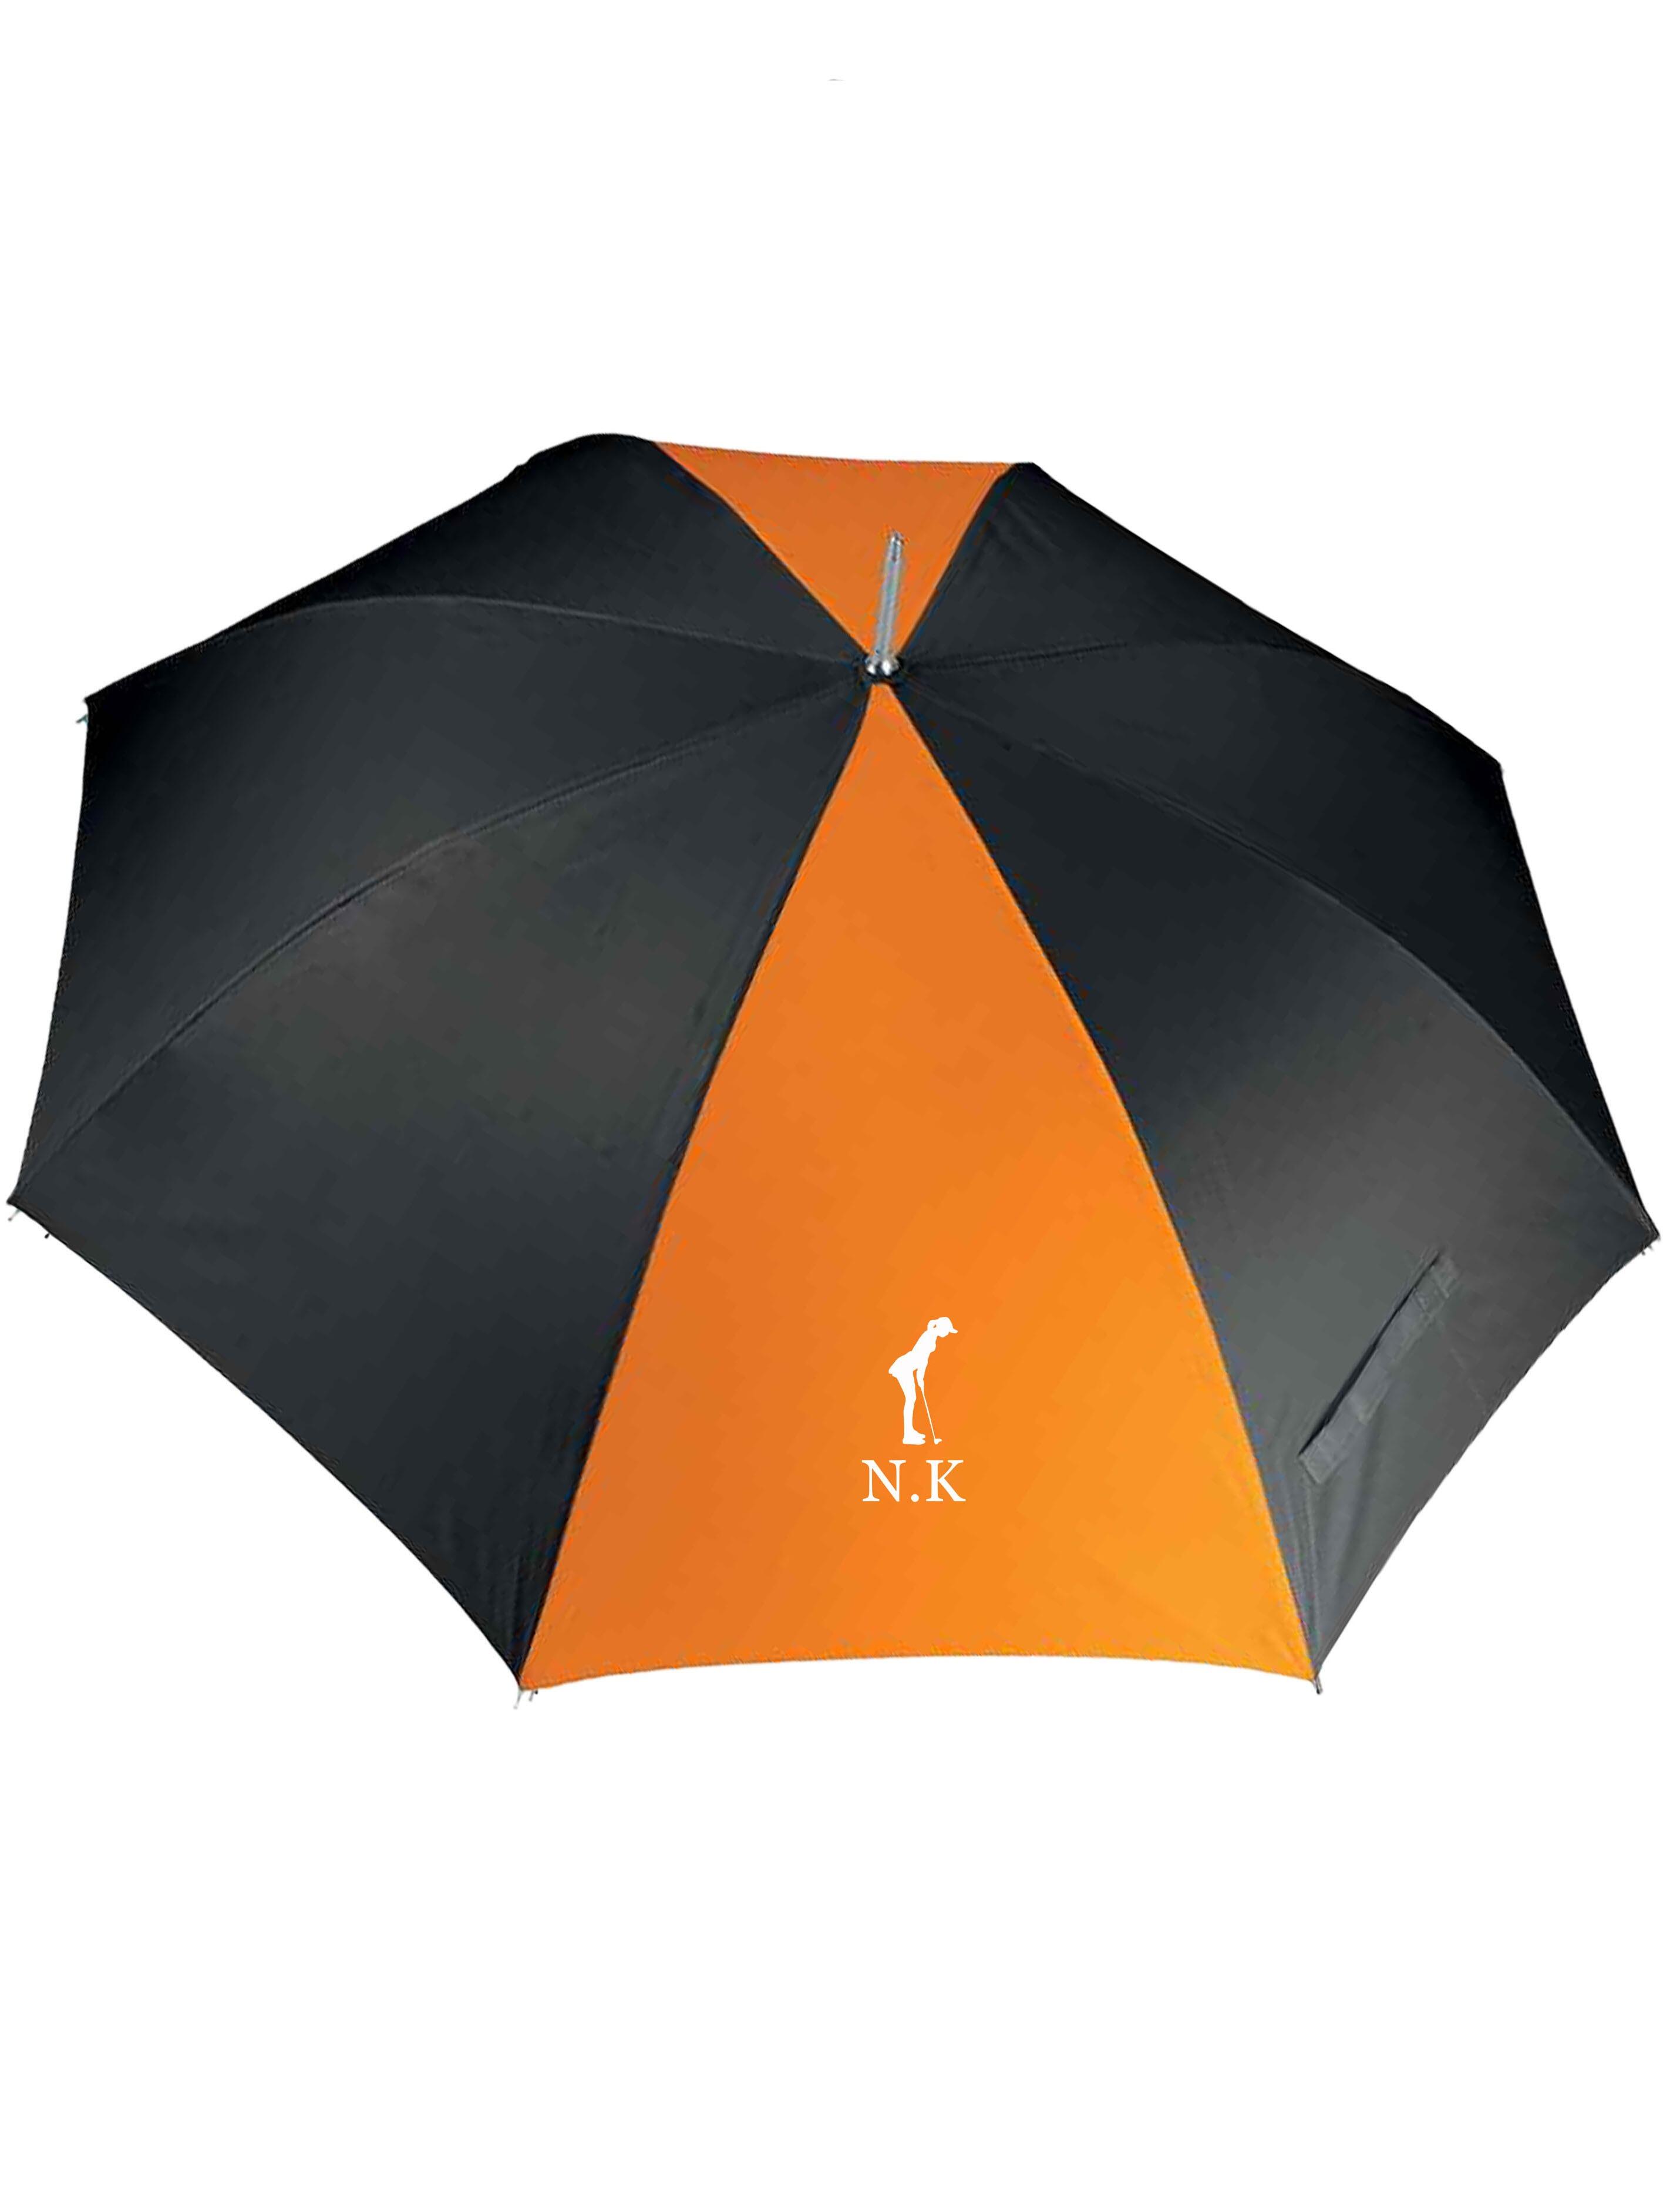 Women's XX-Large Storm Golf Umbrella Black/Orange